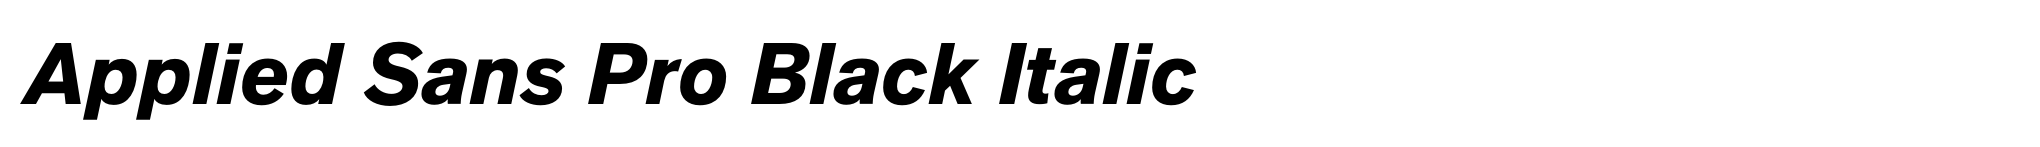 Applied Sans Pro Black Italic image